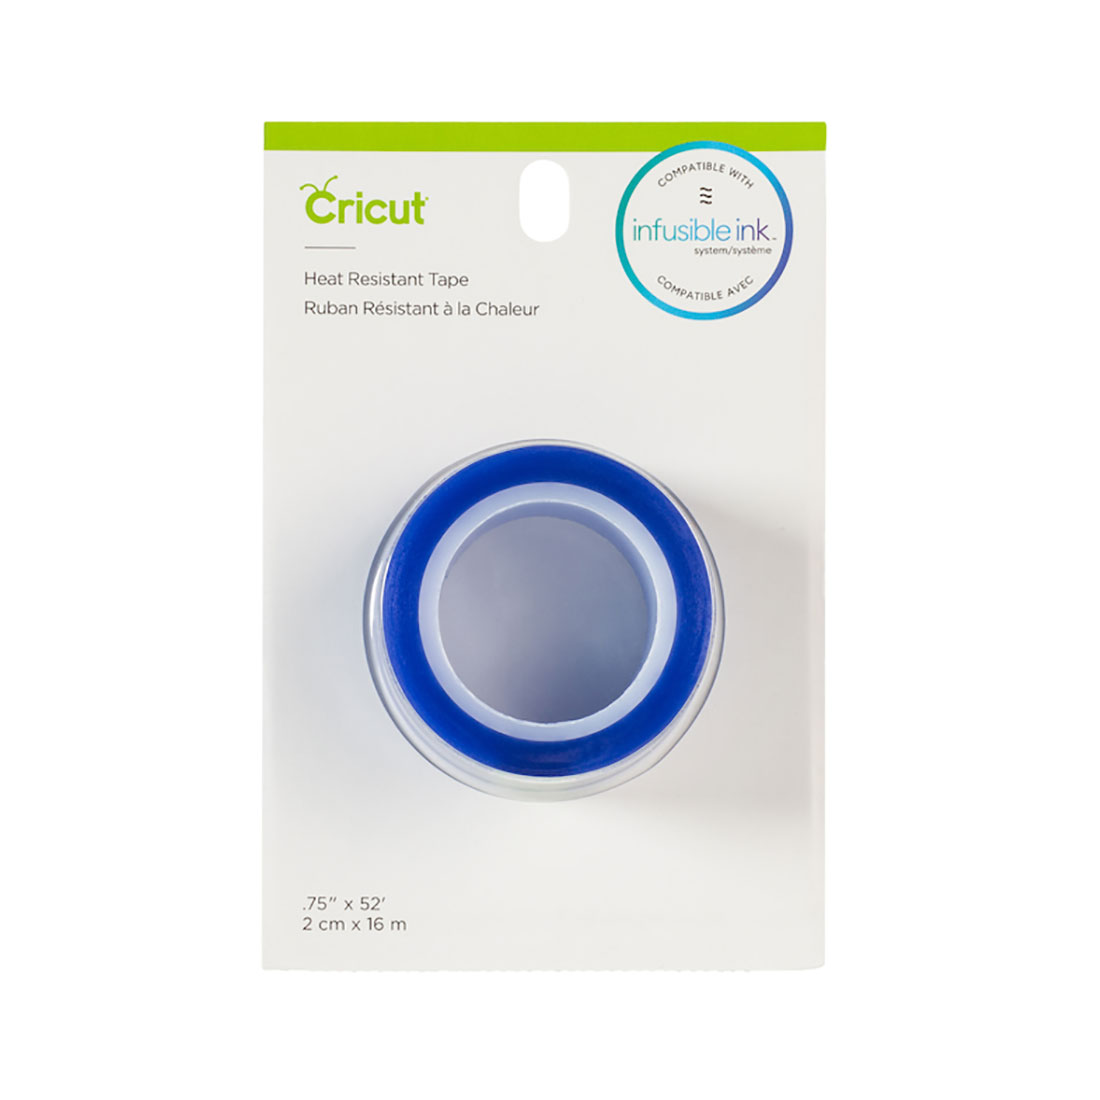 Cricut heat resistant tape trial on heat tape dispenser